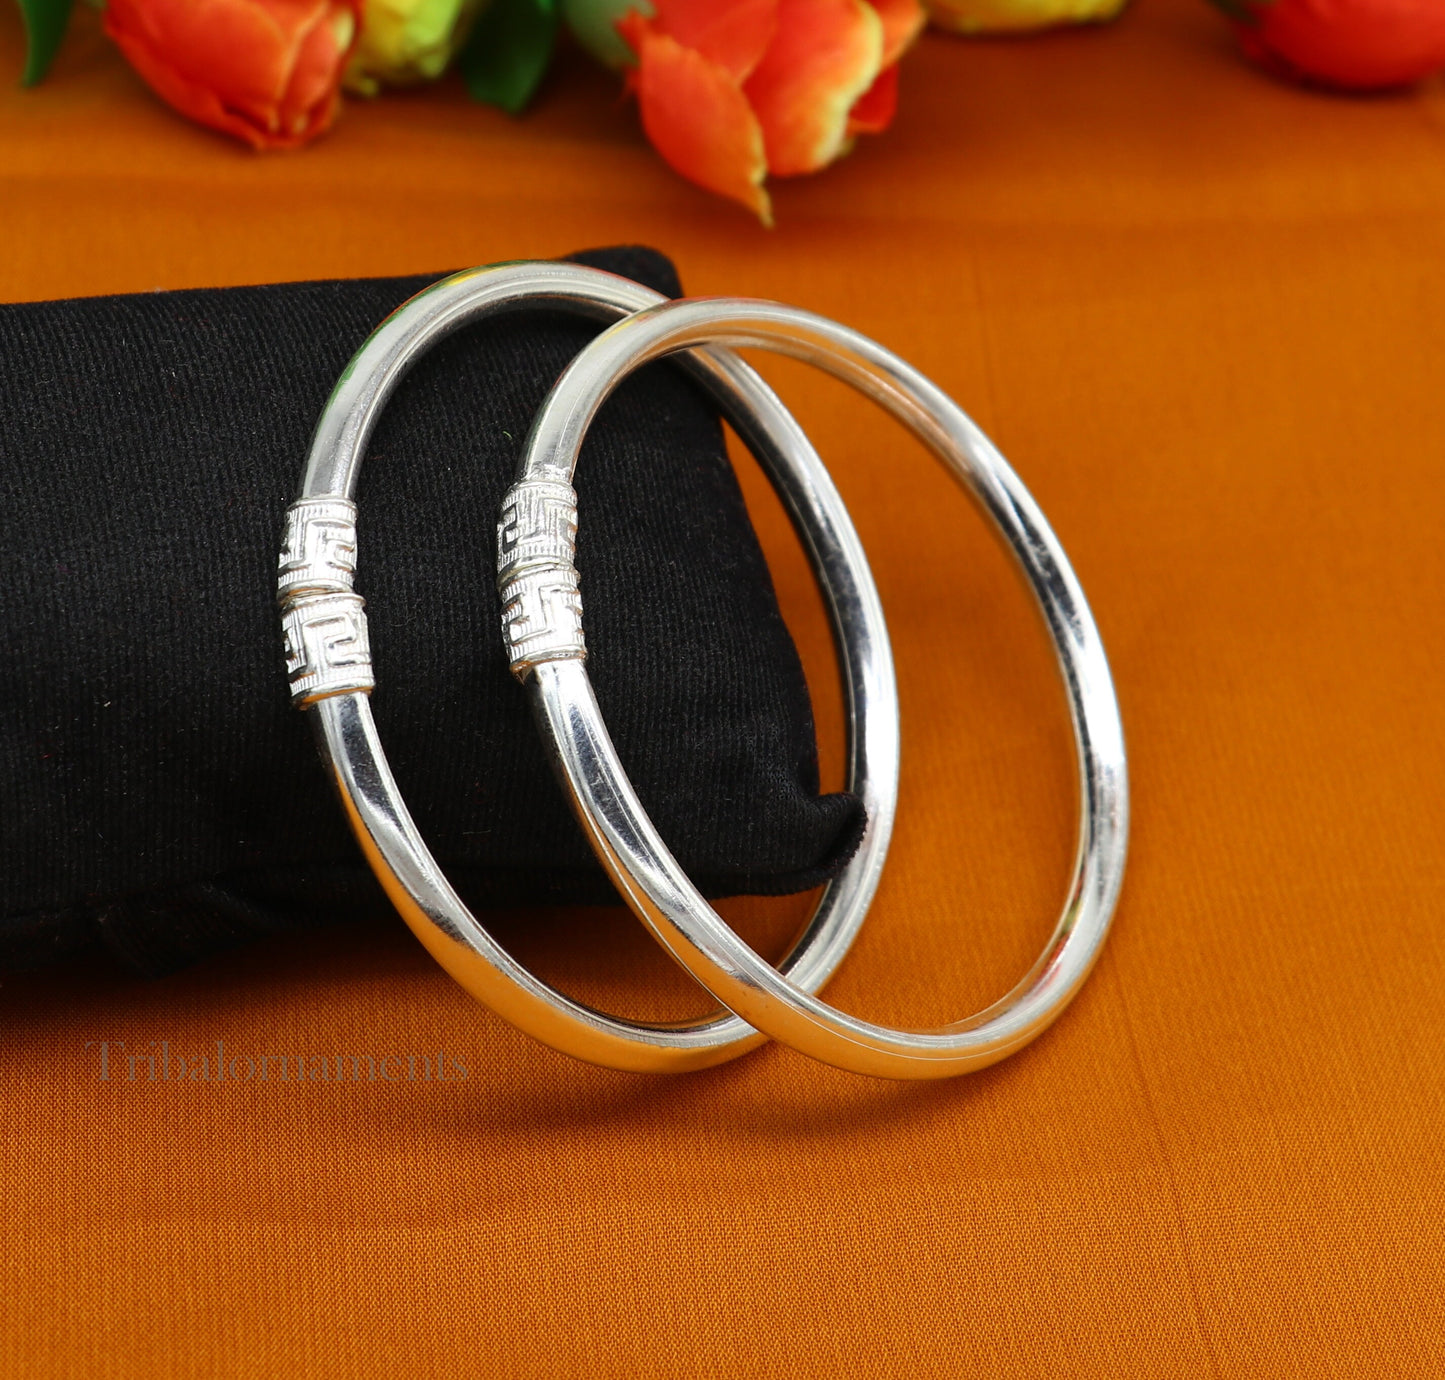 Sterling silver half round handmade amazing design bangle bracelet kangan chudi, excellent design bangle kada gift tribal jewelry  nba203 - TRIBAL ORNAMENTS